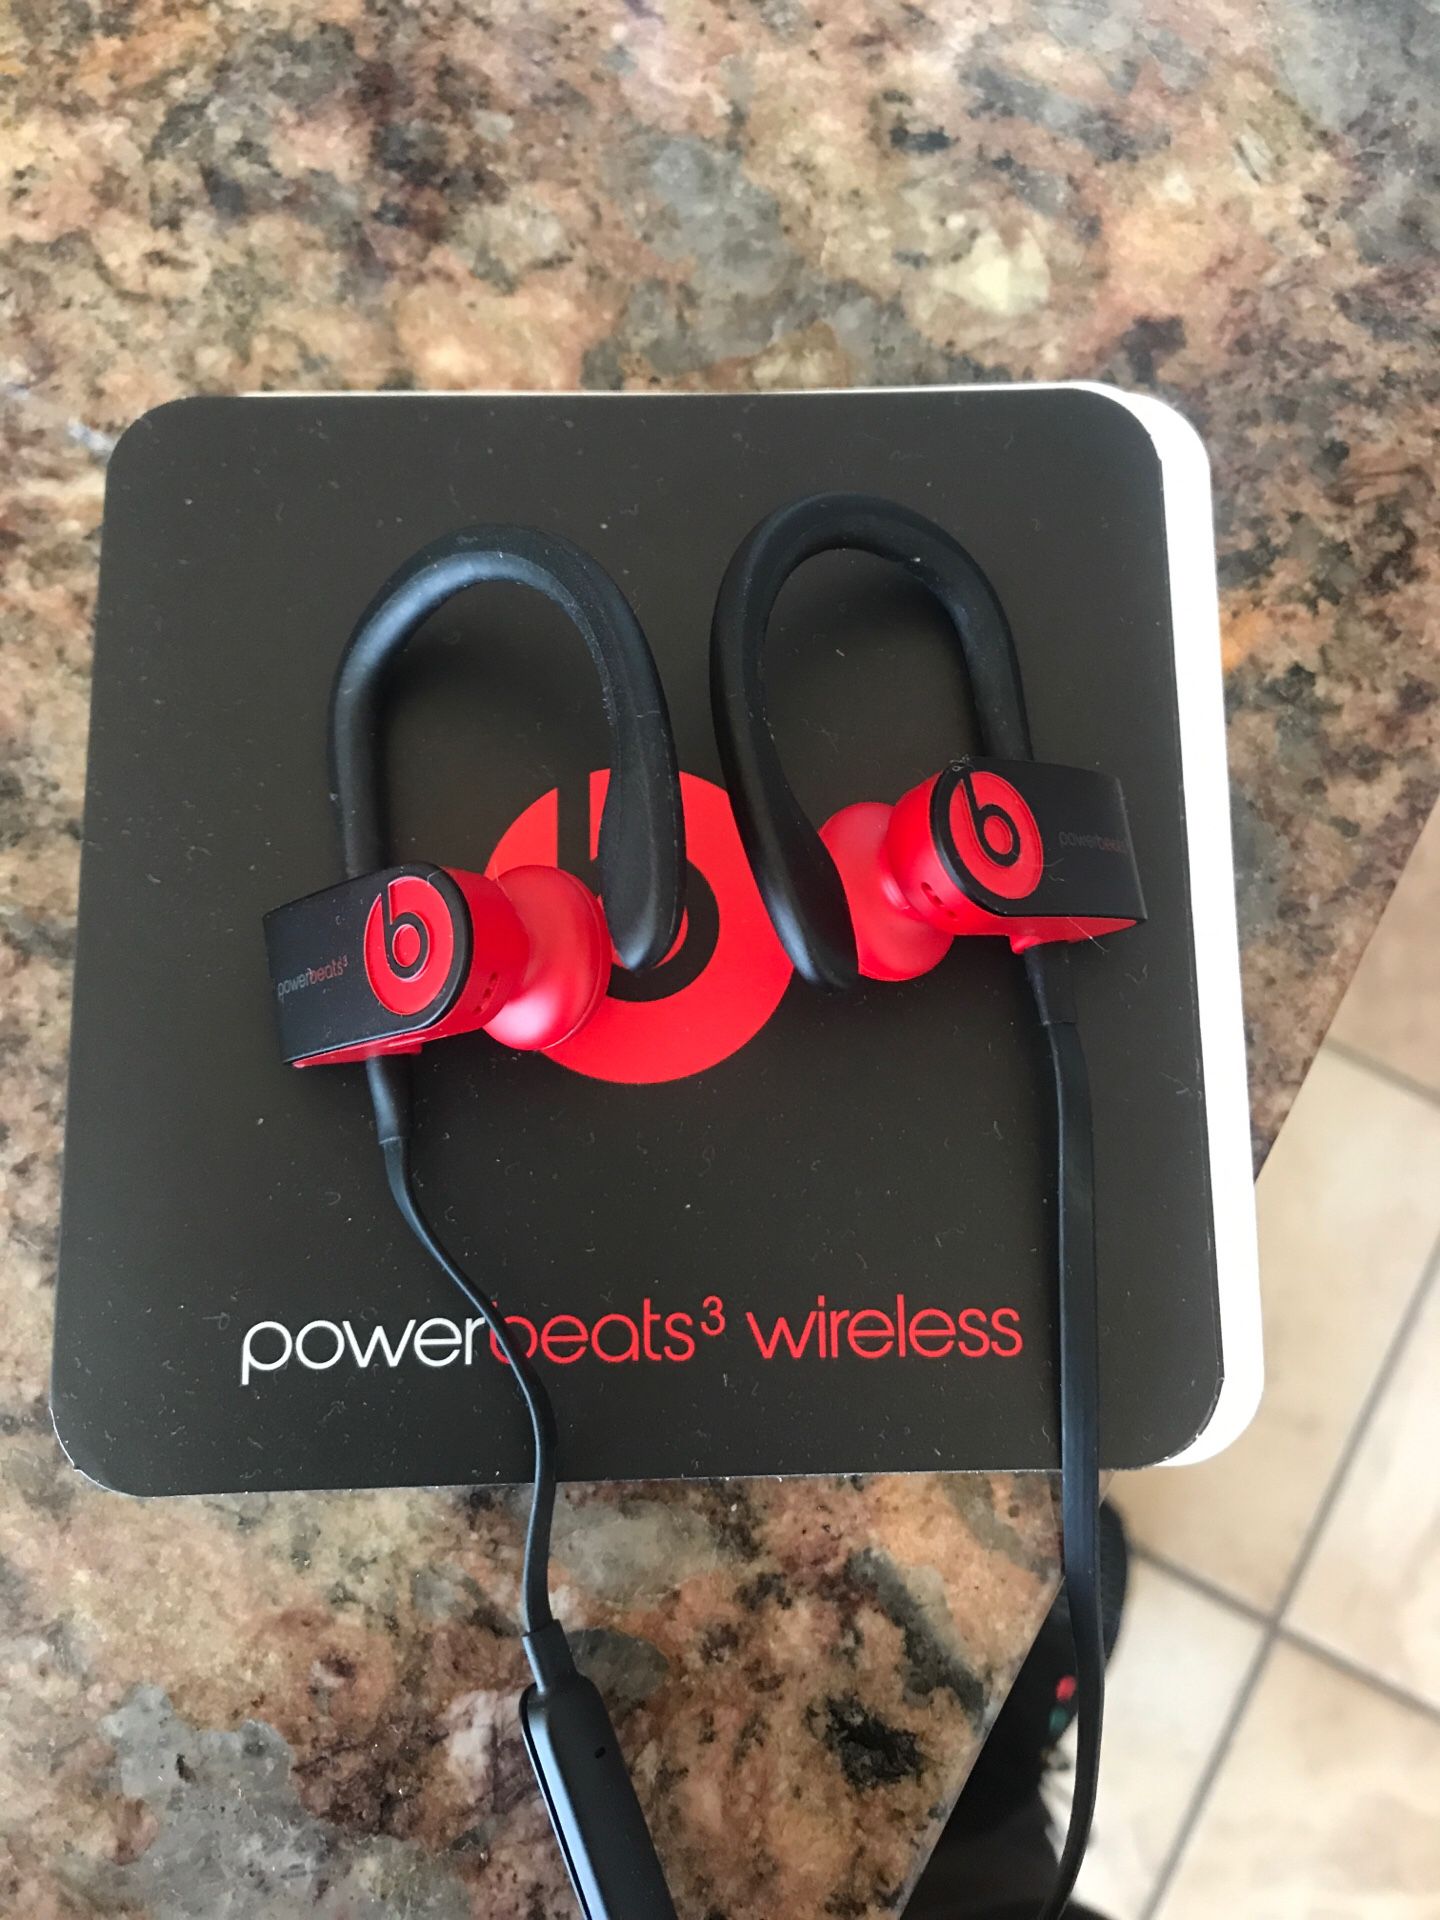 New Power beats 3 wireless headphones